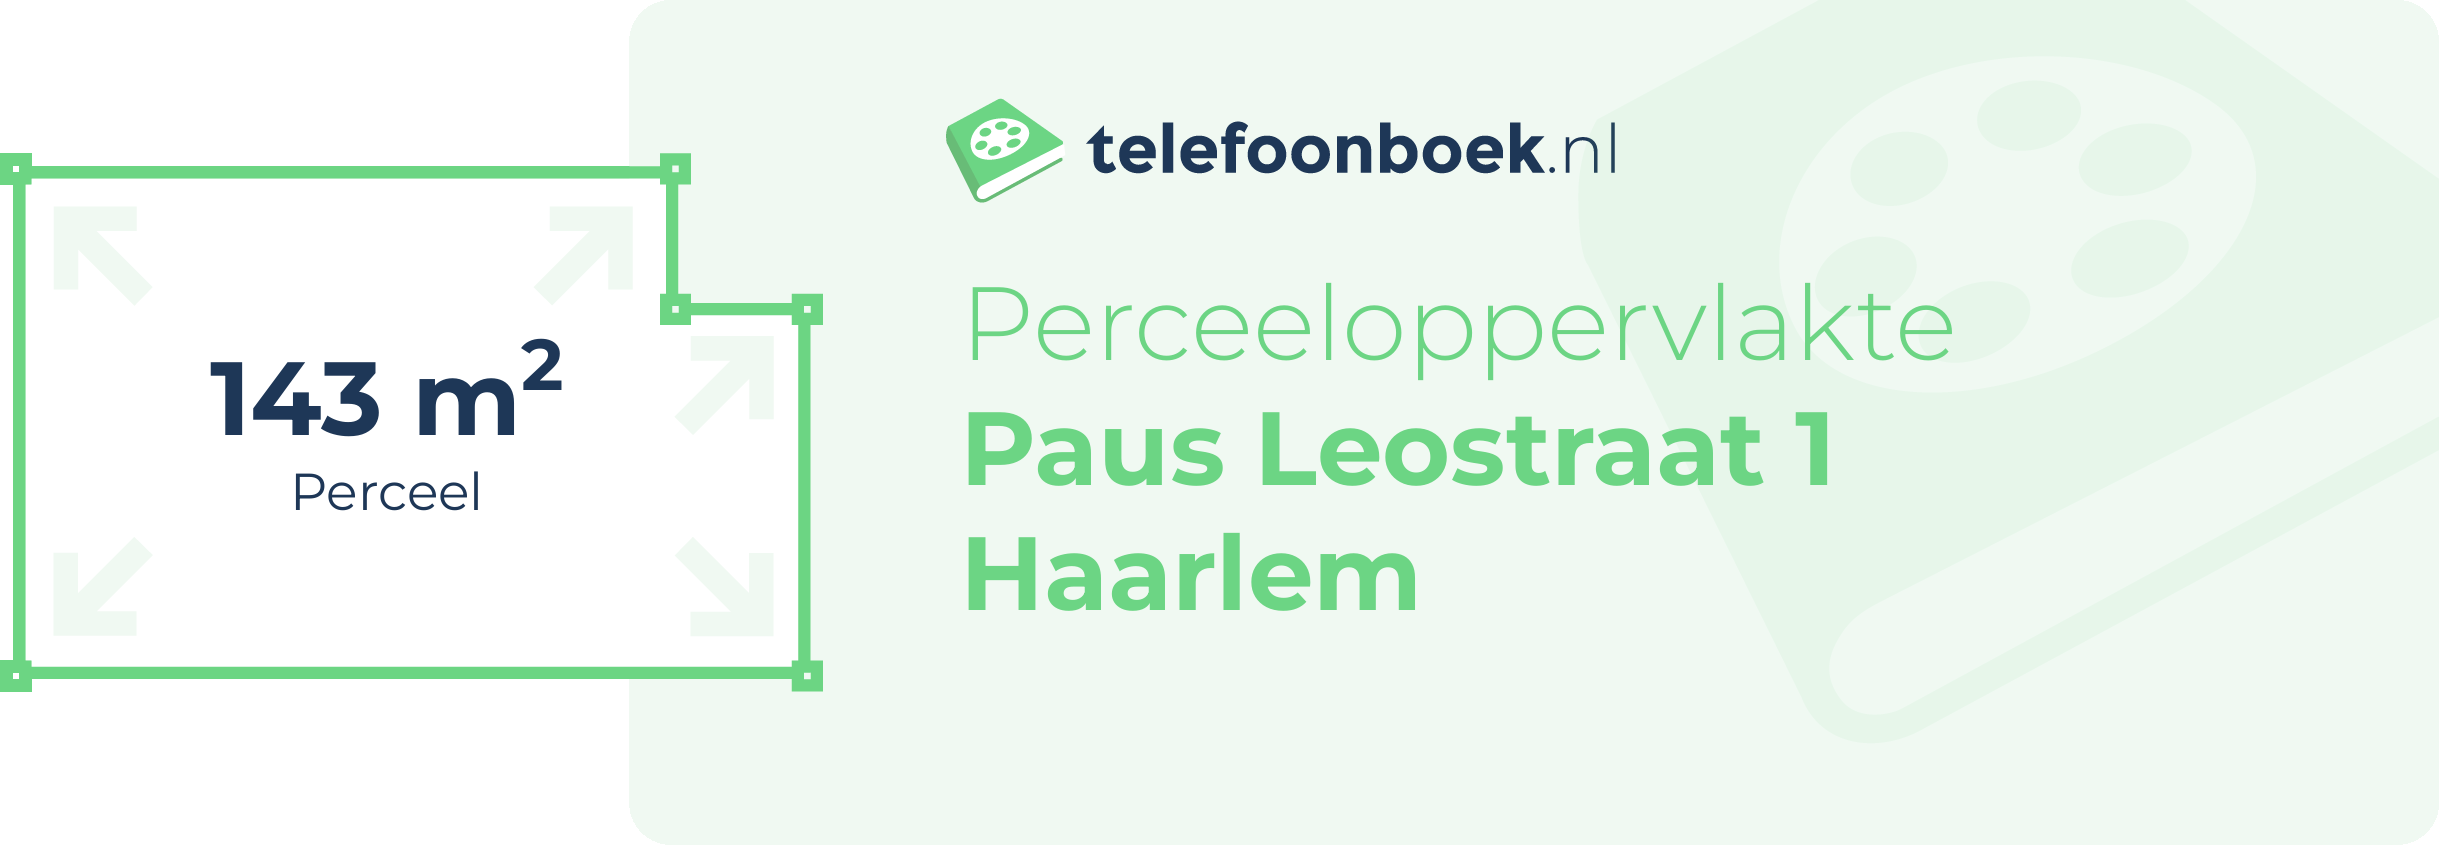 Perceeloppervlakte Paus Leostraat 1 Haarlem